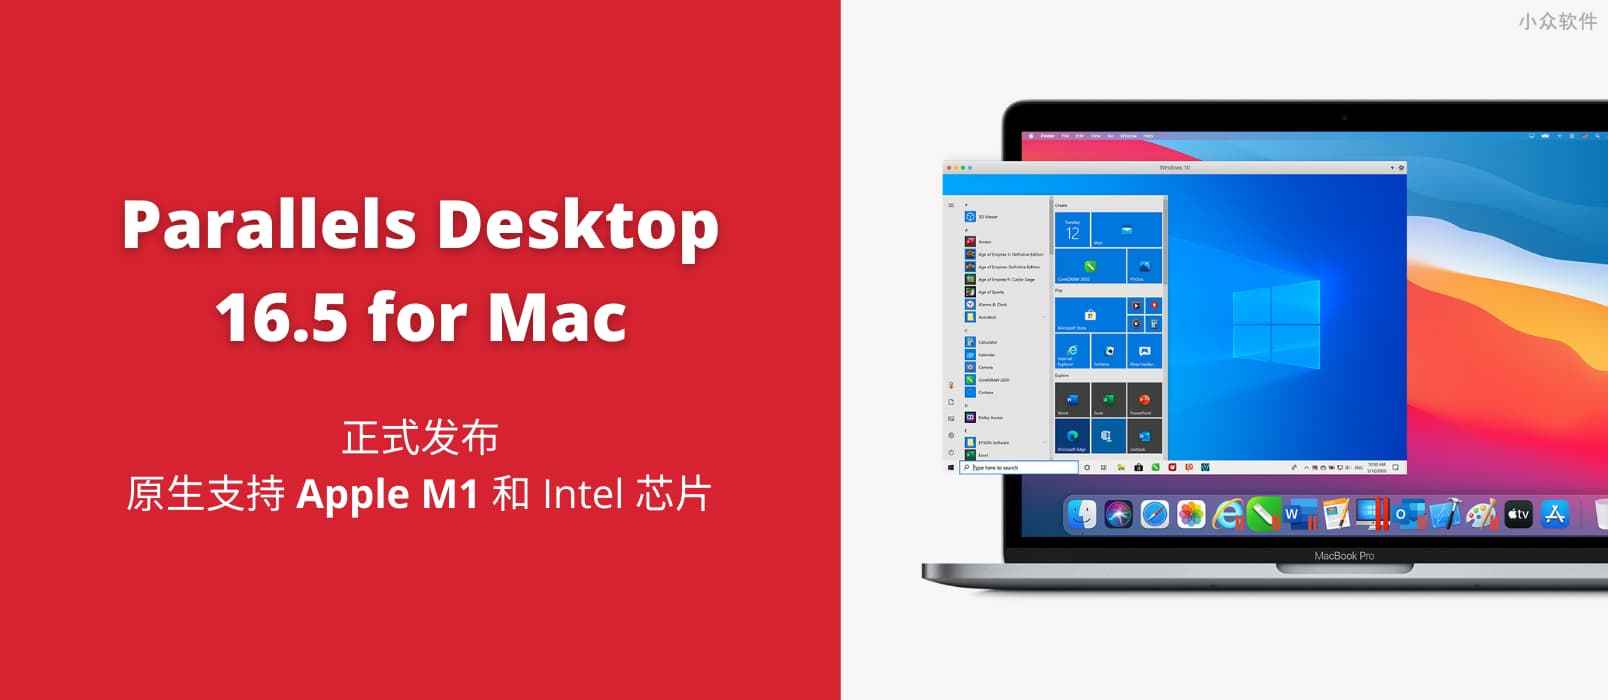 Parallels Desktop 16.5 for Mac 支持 M1 和 Intel 芯片，在 Mac 上以原生速度运行 Windows 10，限时 9 折优惠